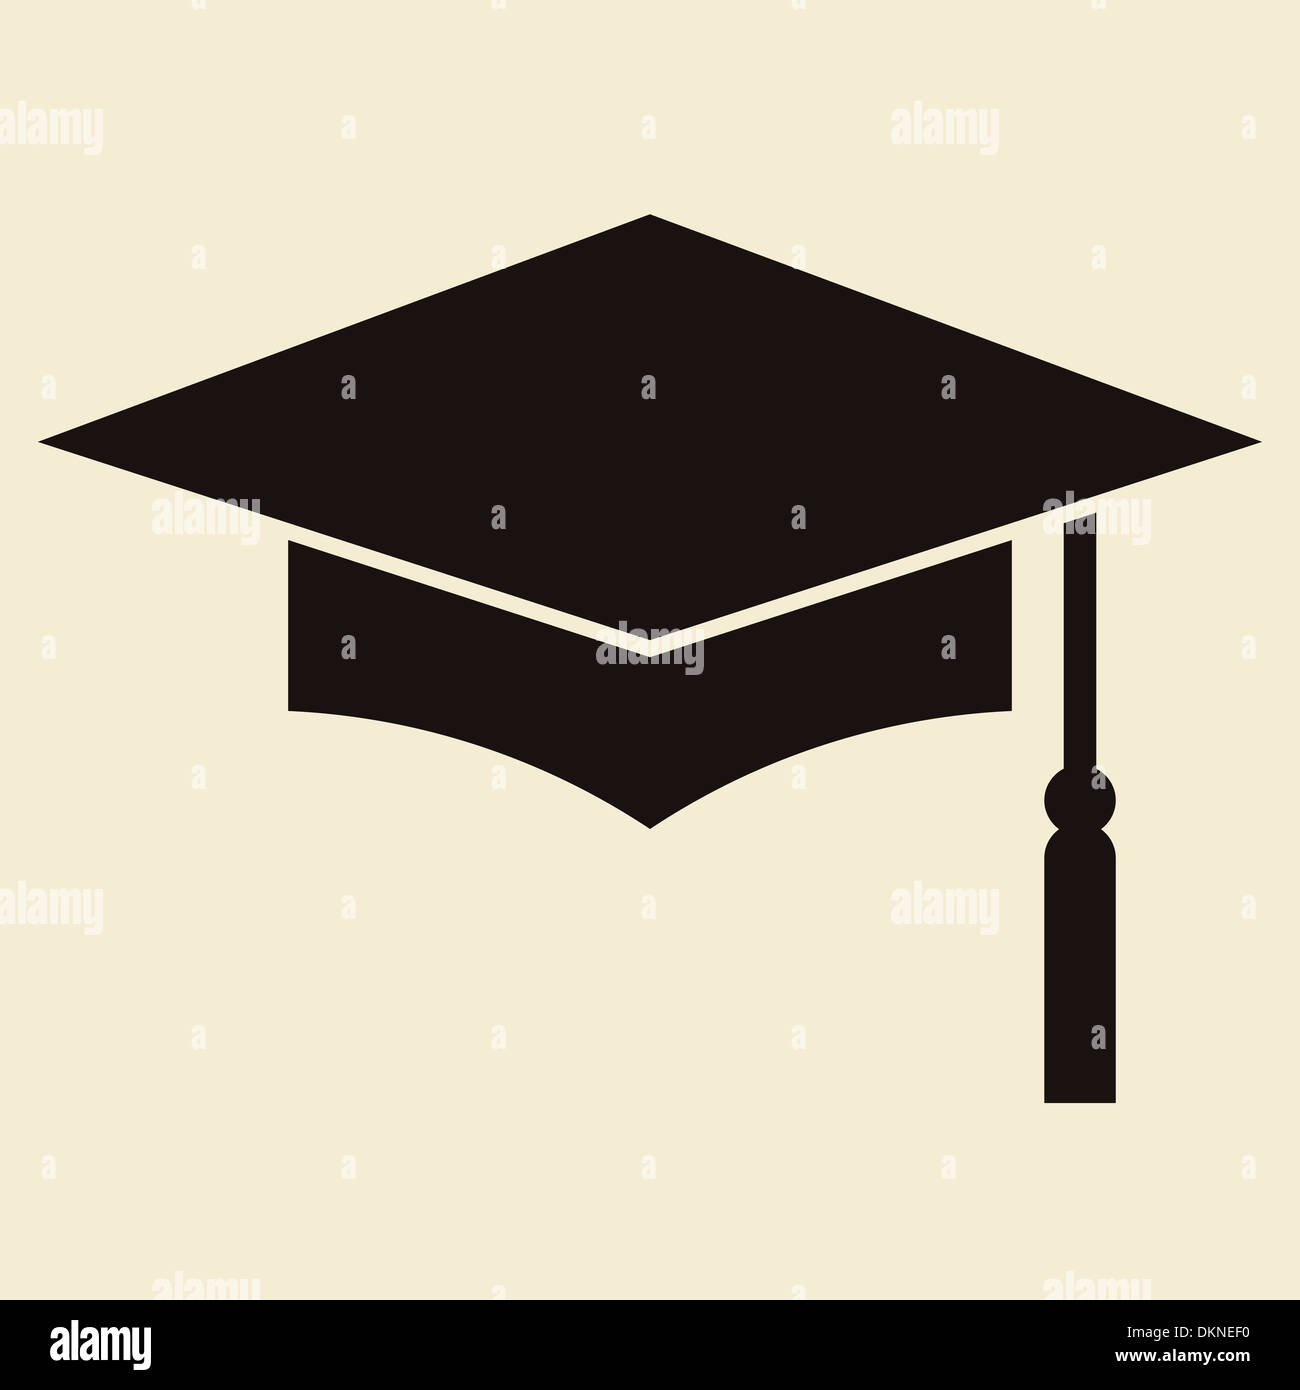 Mortar Board or Graduation Cap, Education symbol Stock Photo - Alamy